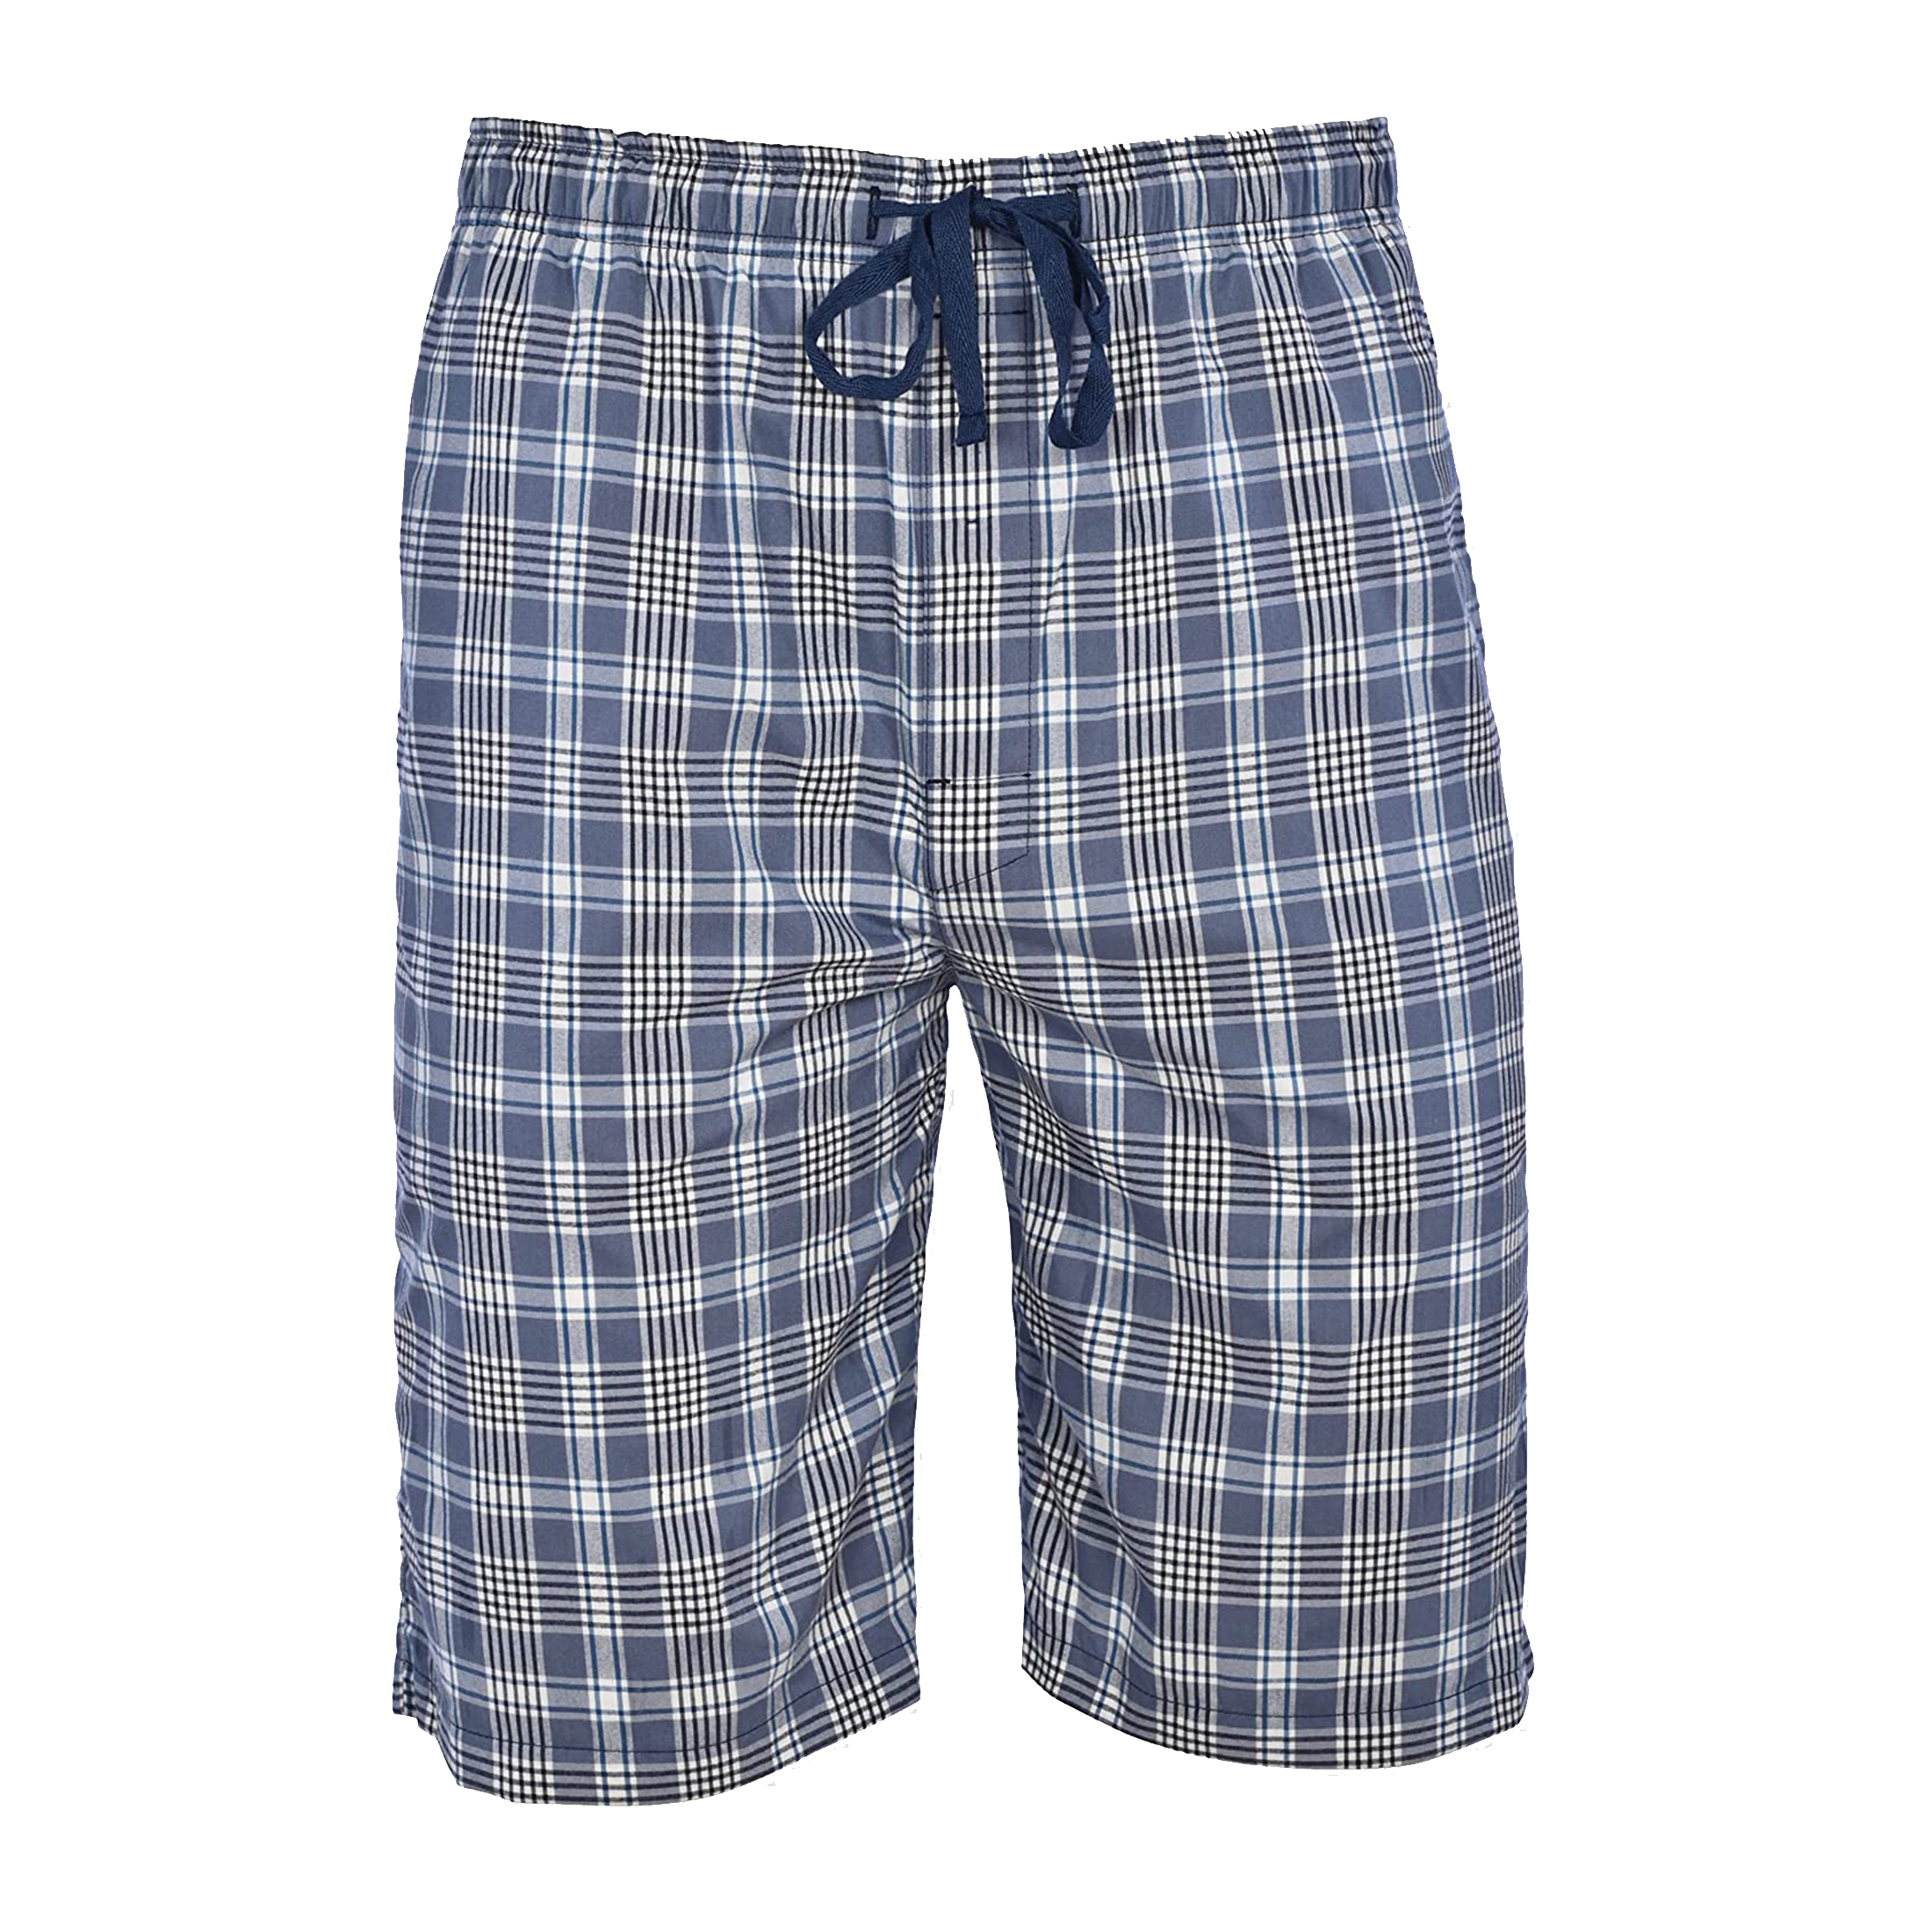 Multi-Pack: Men's Ultra-Soft Jersey Knit Sleep Lounge Pajama Shorts For Sleepwear - Plaid, 1 Pack, X-Large